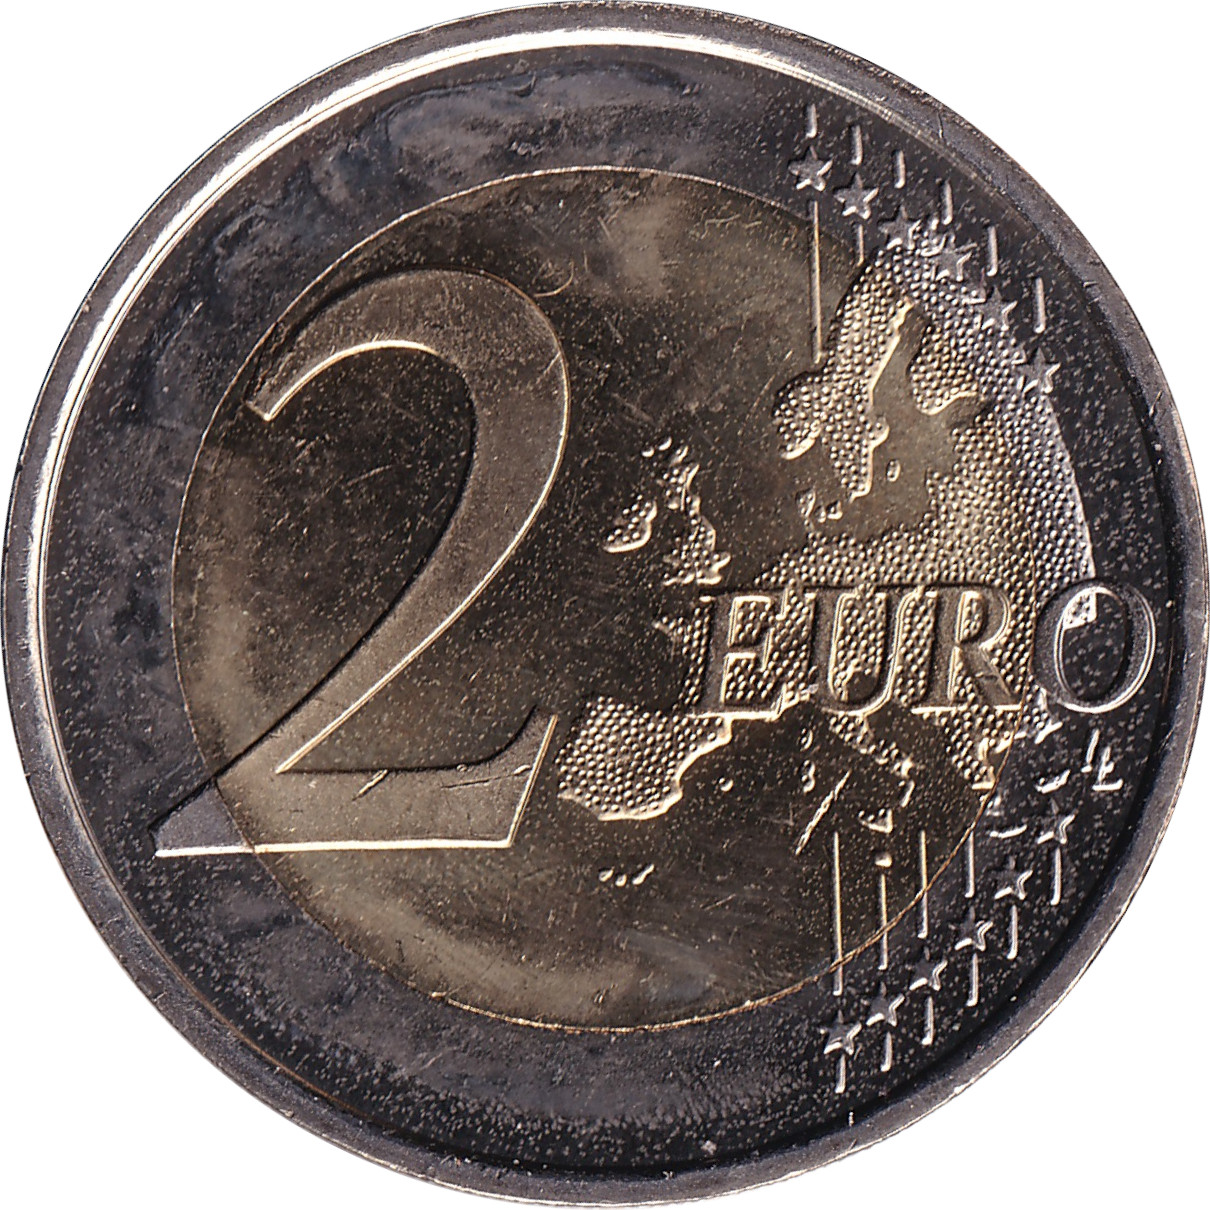 2 euro - Intronisation de Philippe VI